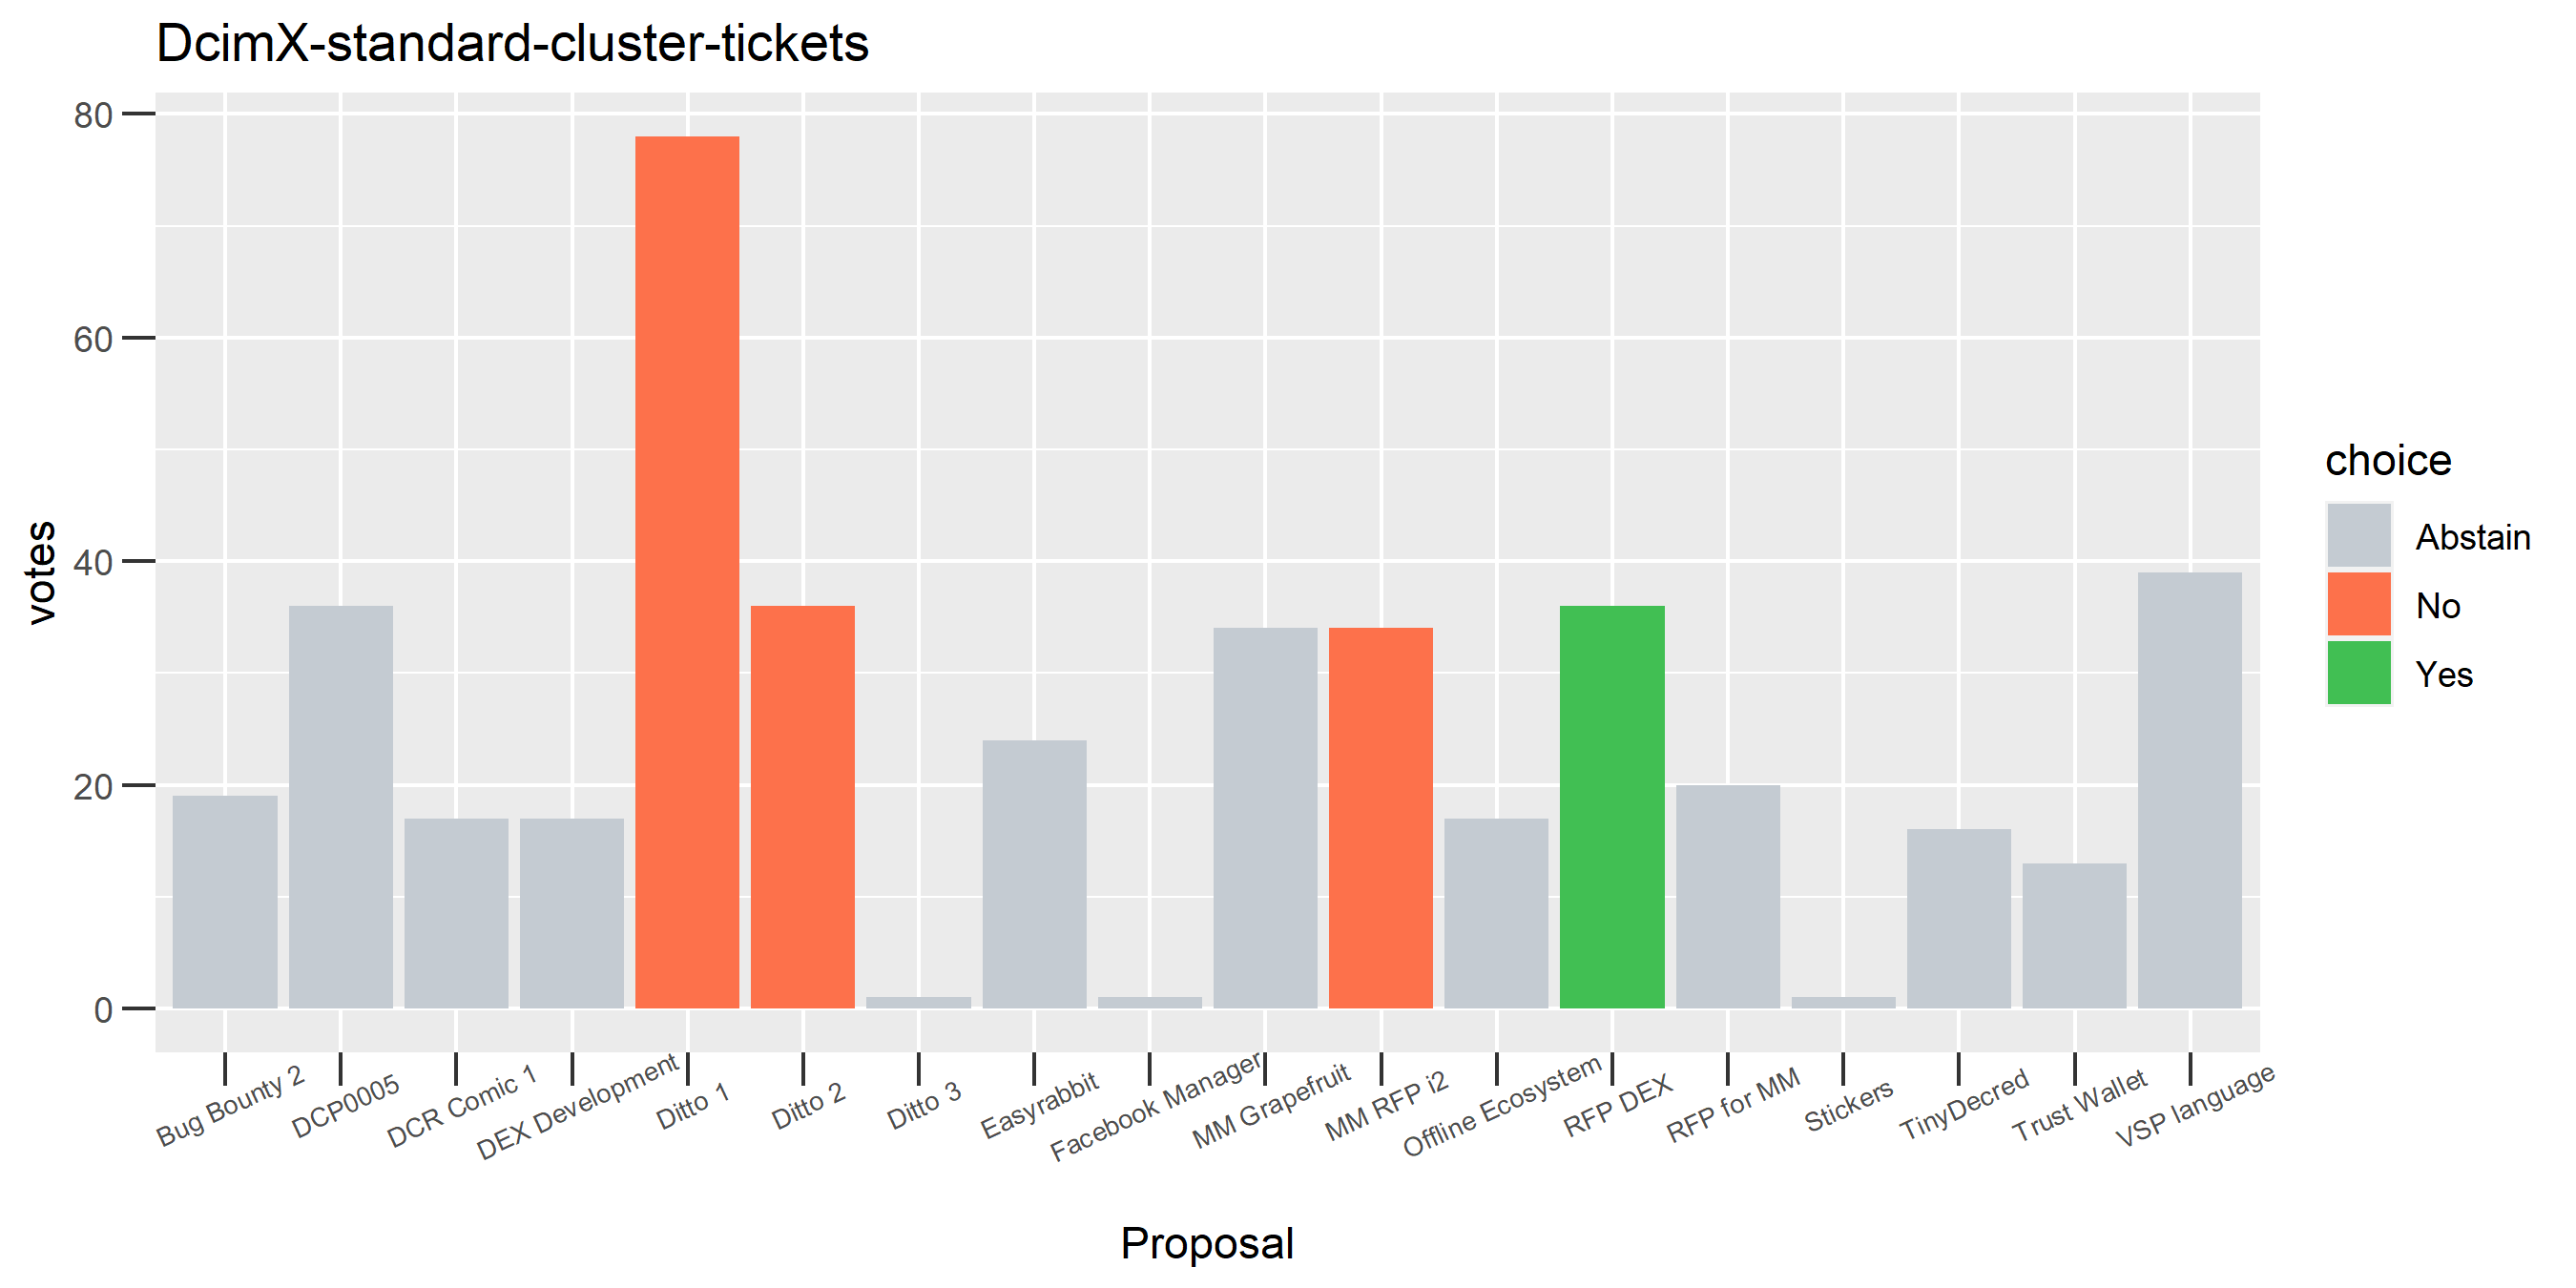 DcimX-standard-cluster-tickets